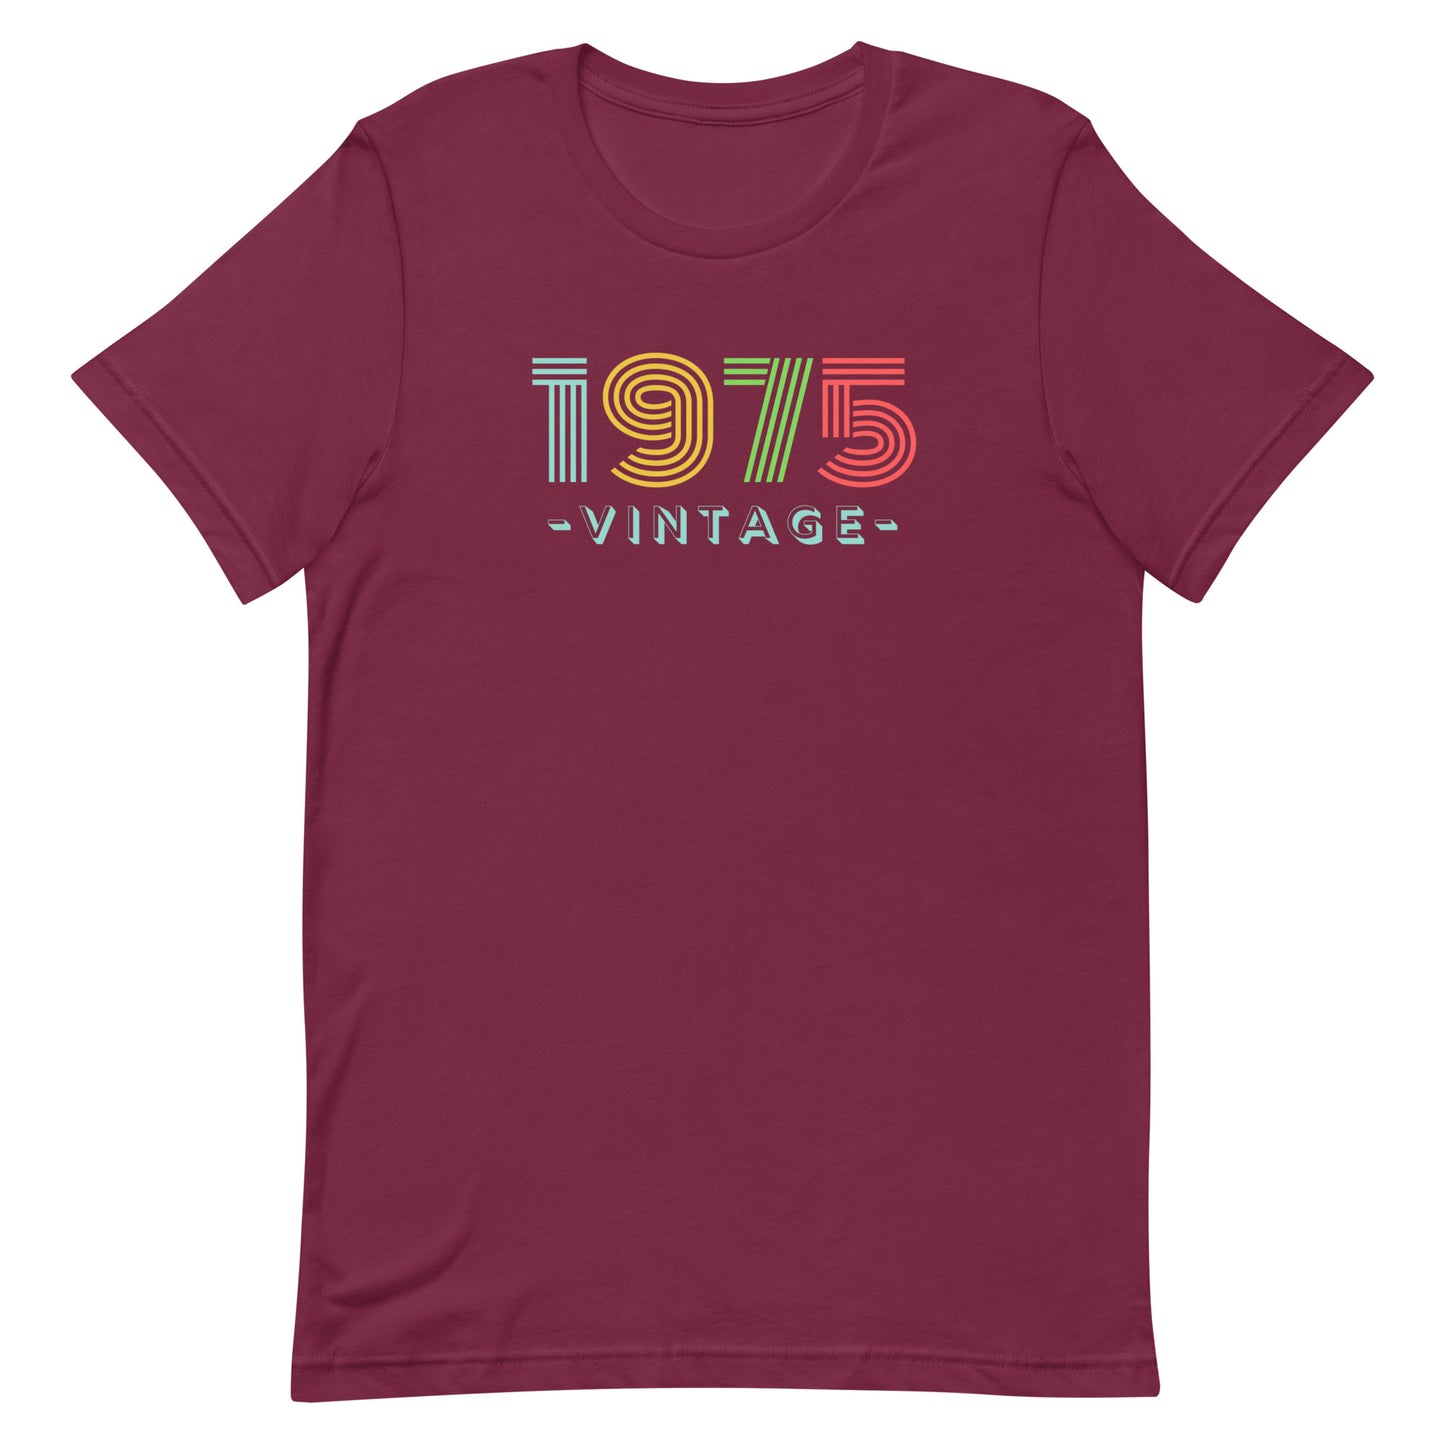 1975 Vintage T-shirt